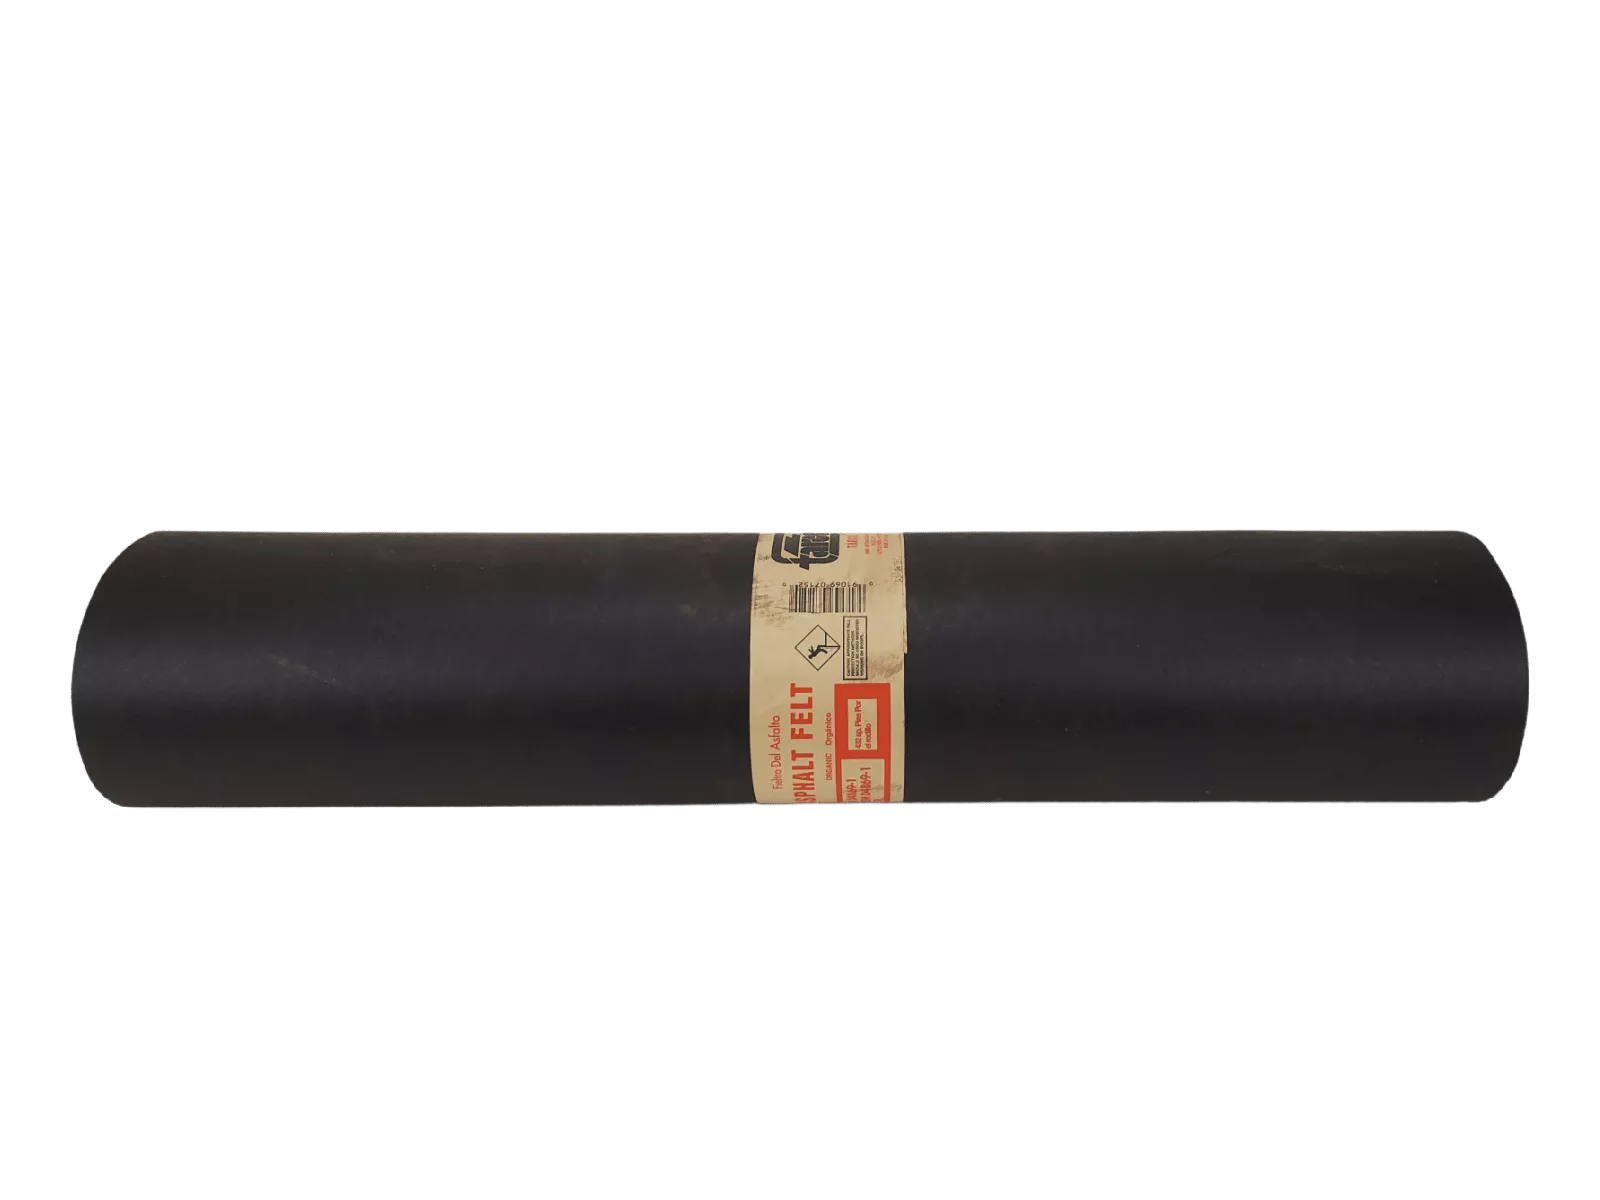 Roll of tar paper, a vital accessory for ensuring optimal bedliner application.